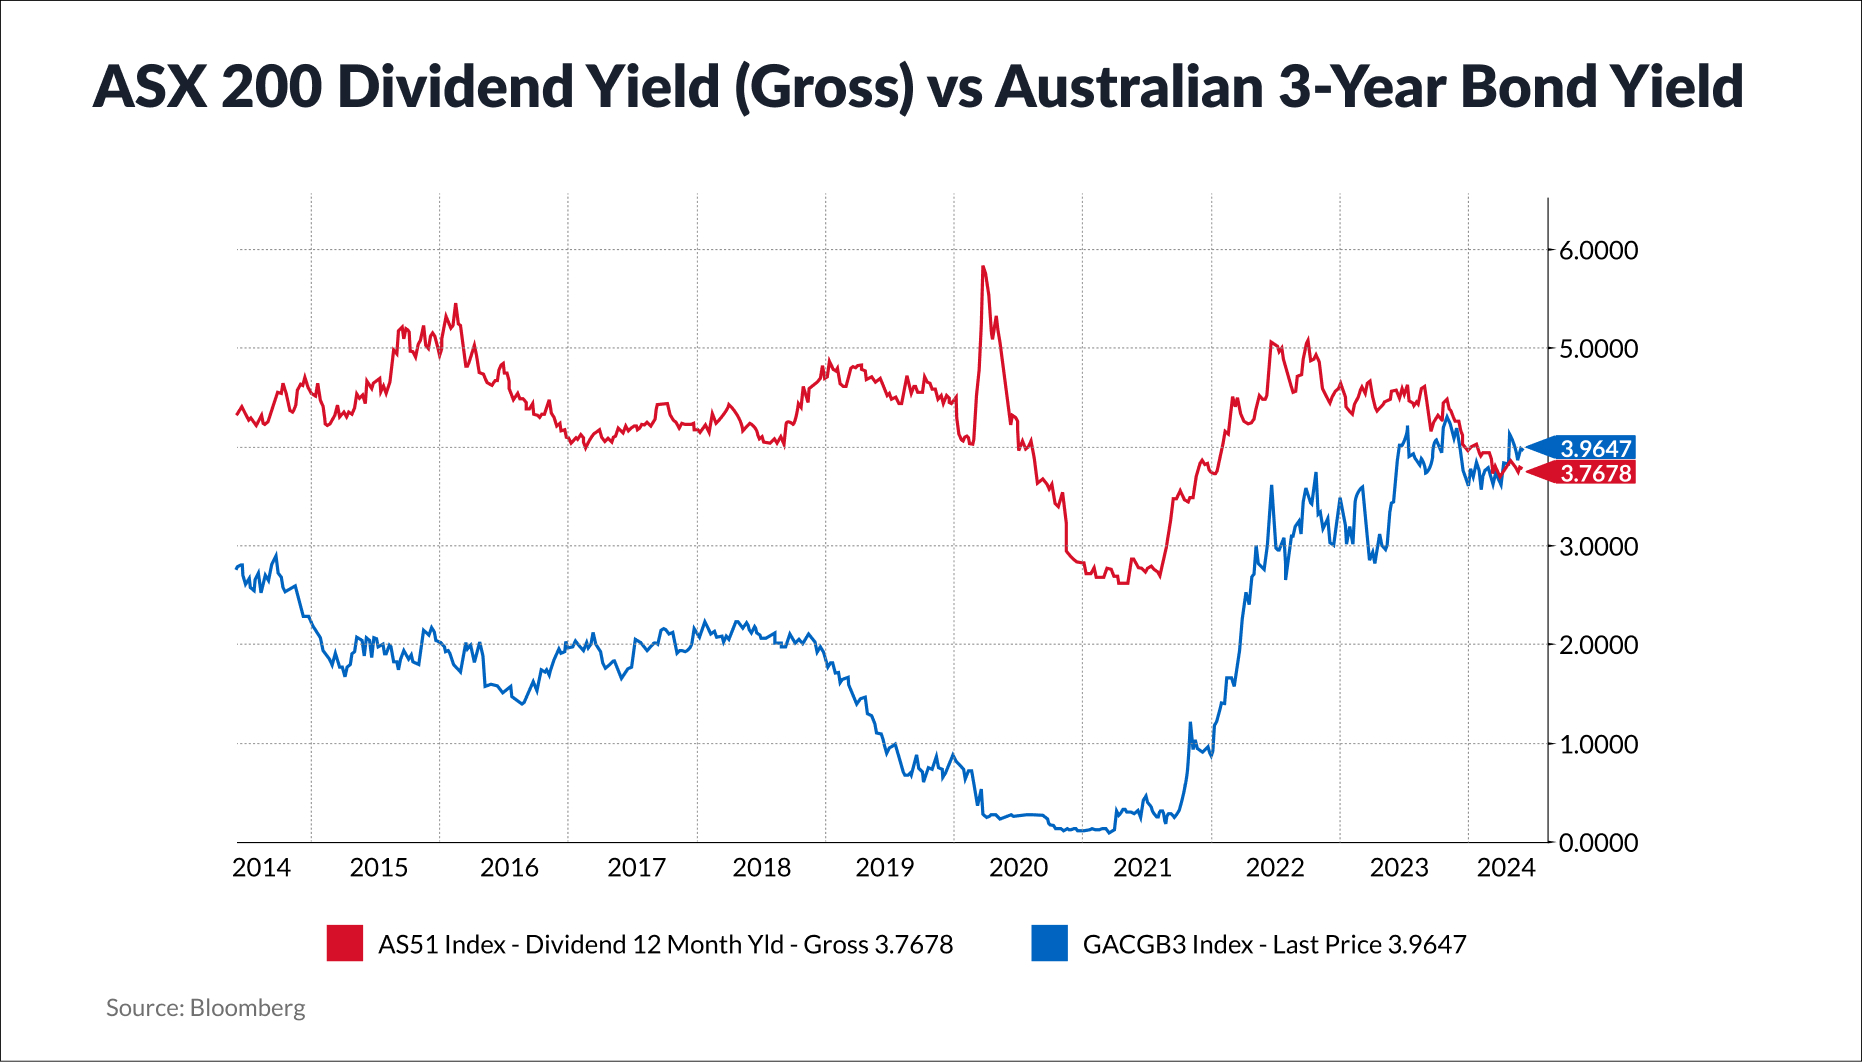 ASX 200 Dividend Yield (Gross) vs Australian 3-Year Bond Yield